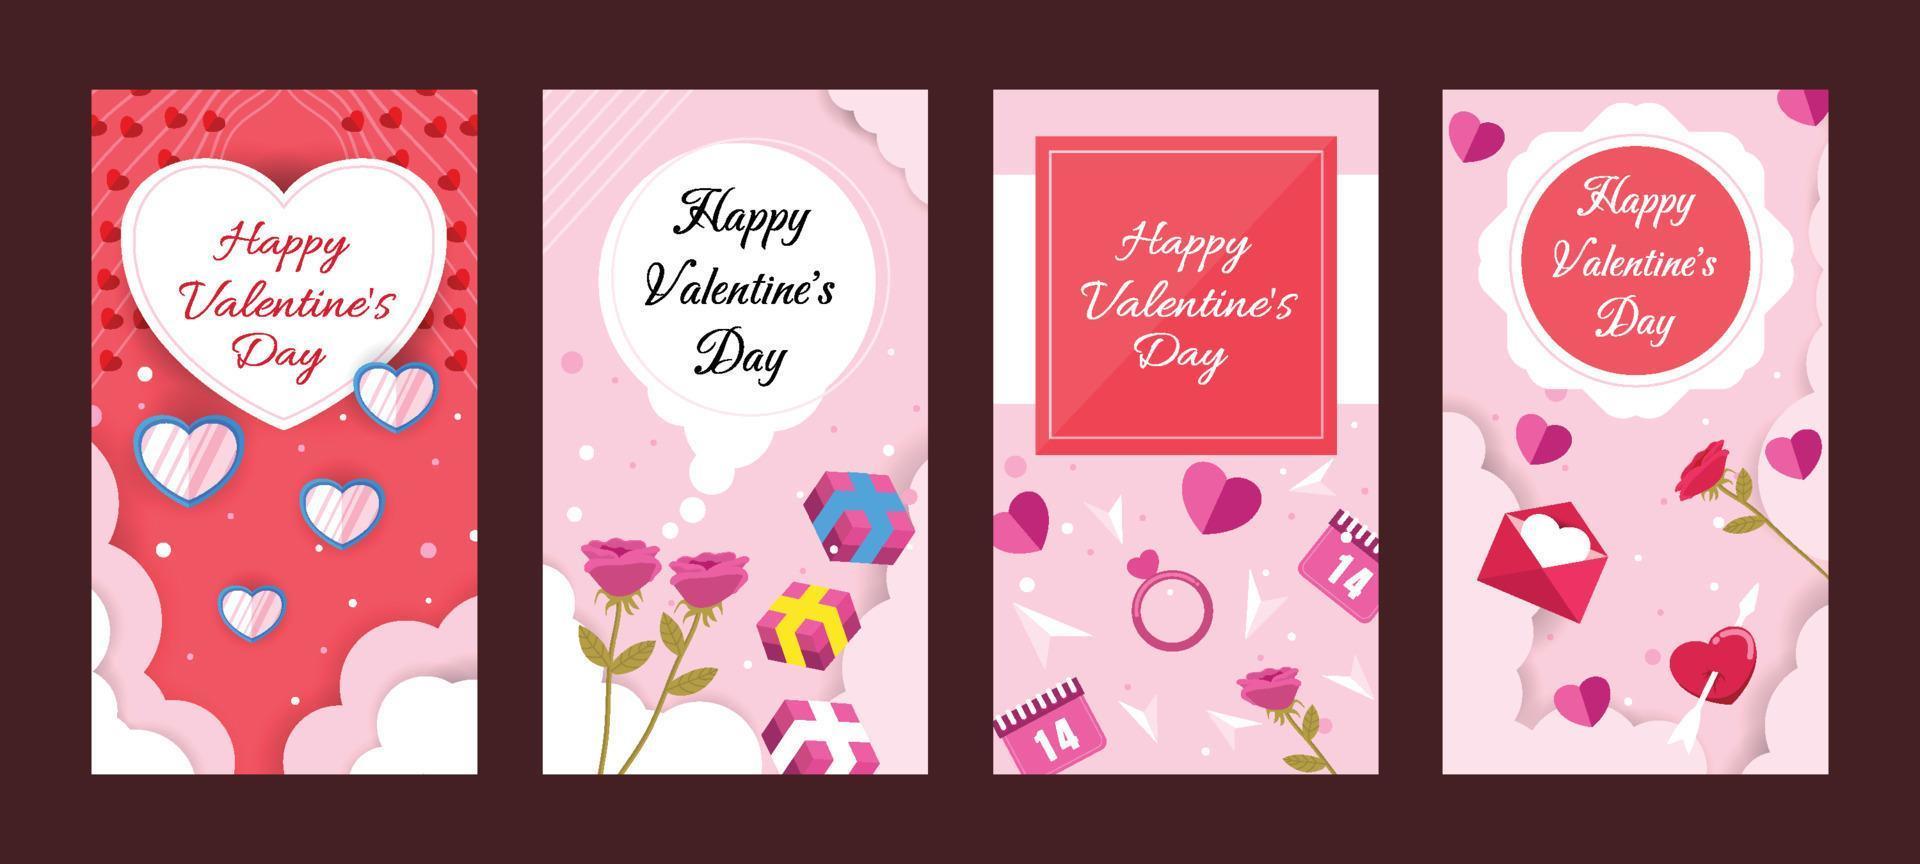 Valentine's Day Instagram Posts Card vector